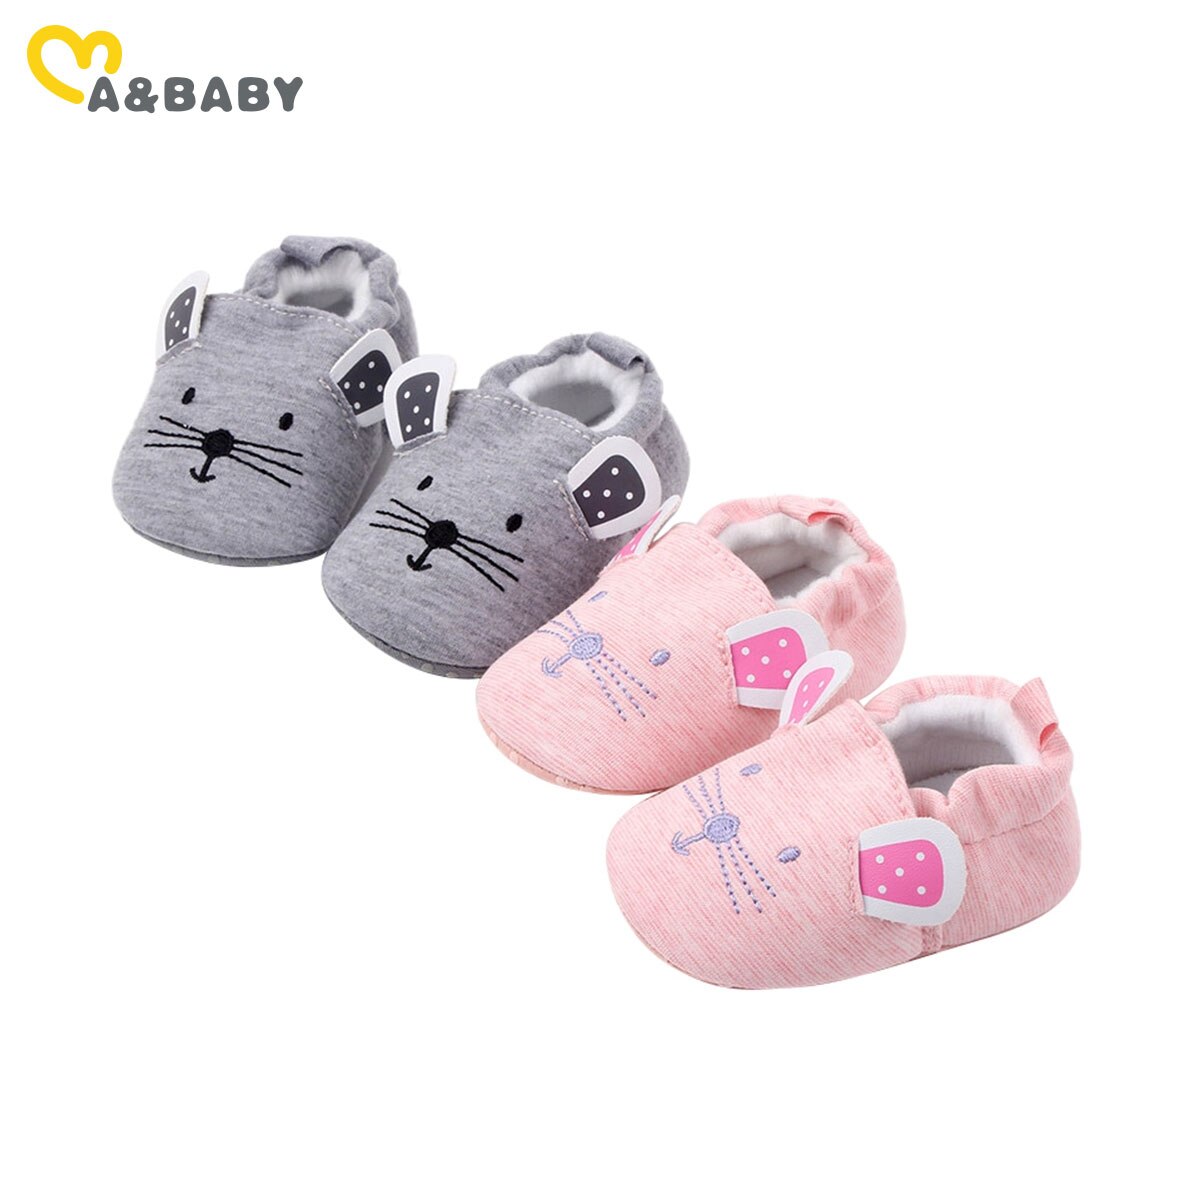 Ma & baby 0-24m nyfødte baby baby pige dreng krybbe sko tegneserie dyr varme sko til baby efterår vinter